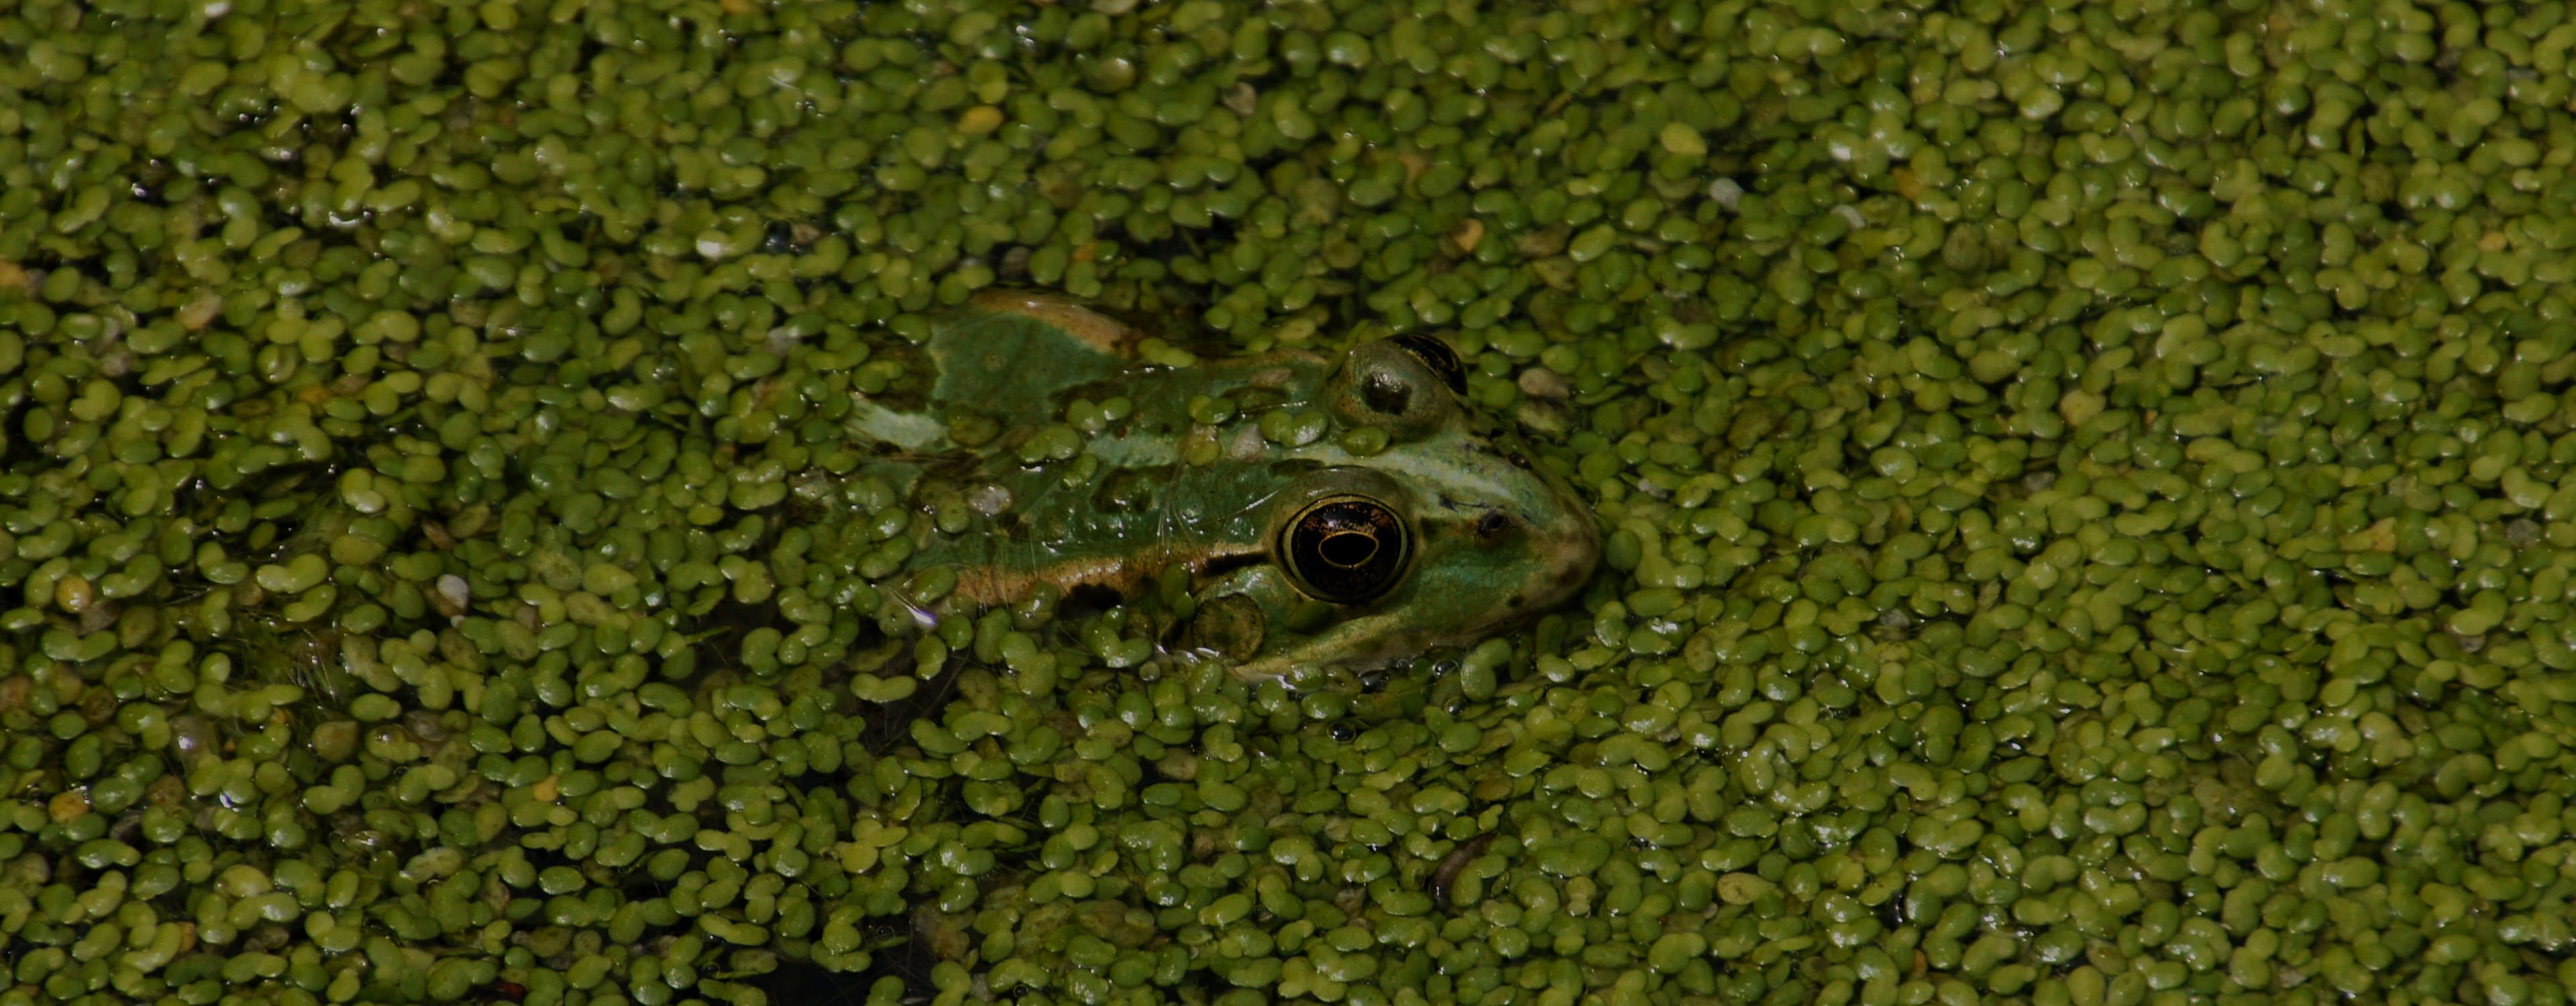 Mala zelená žabka (www.pixabay.com)